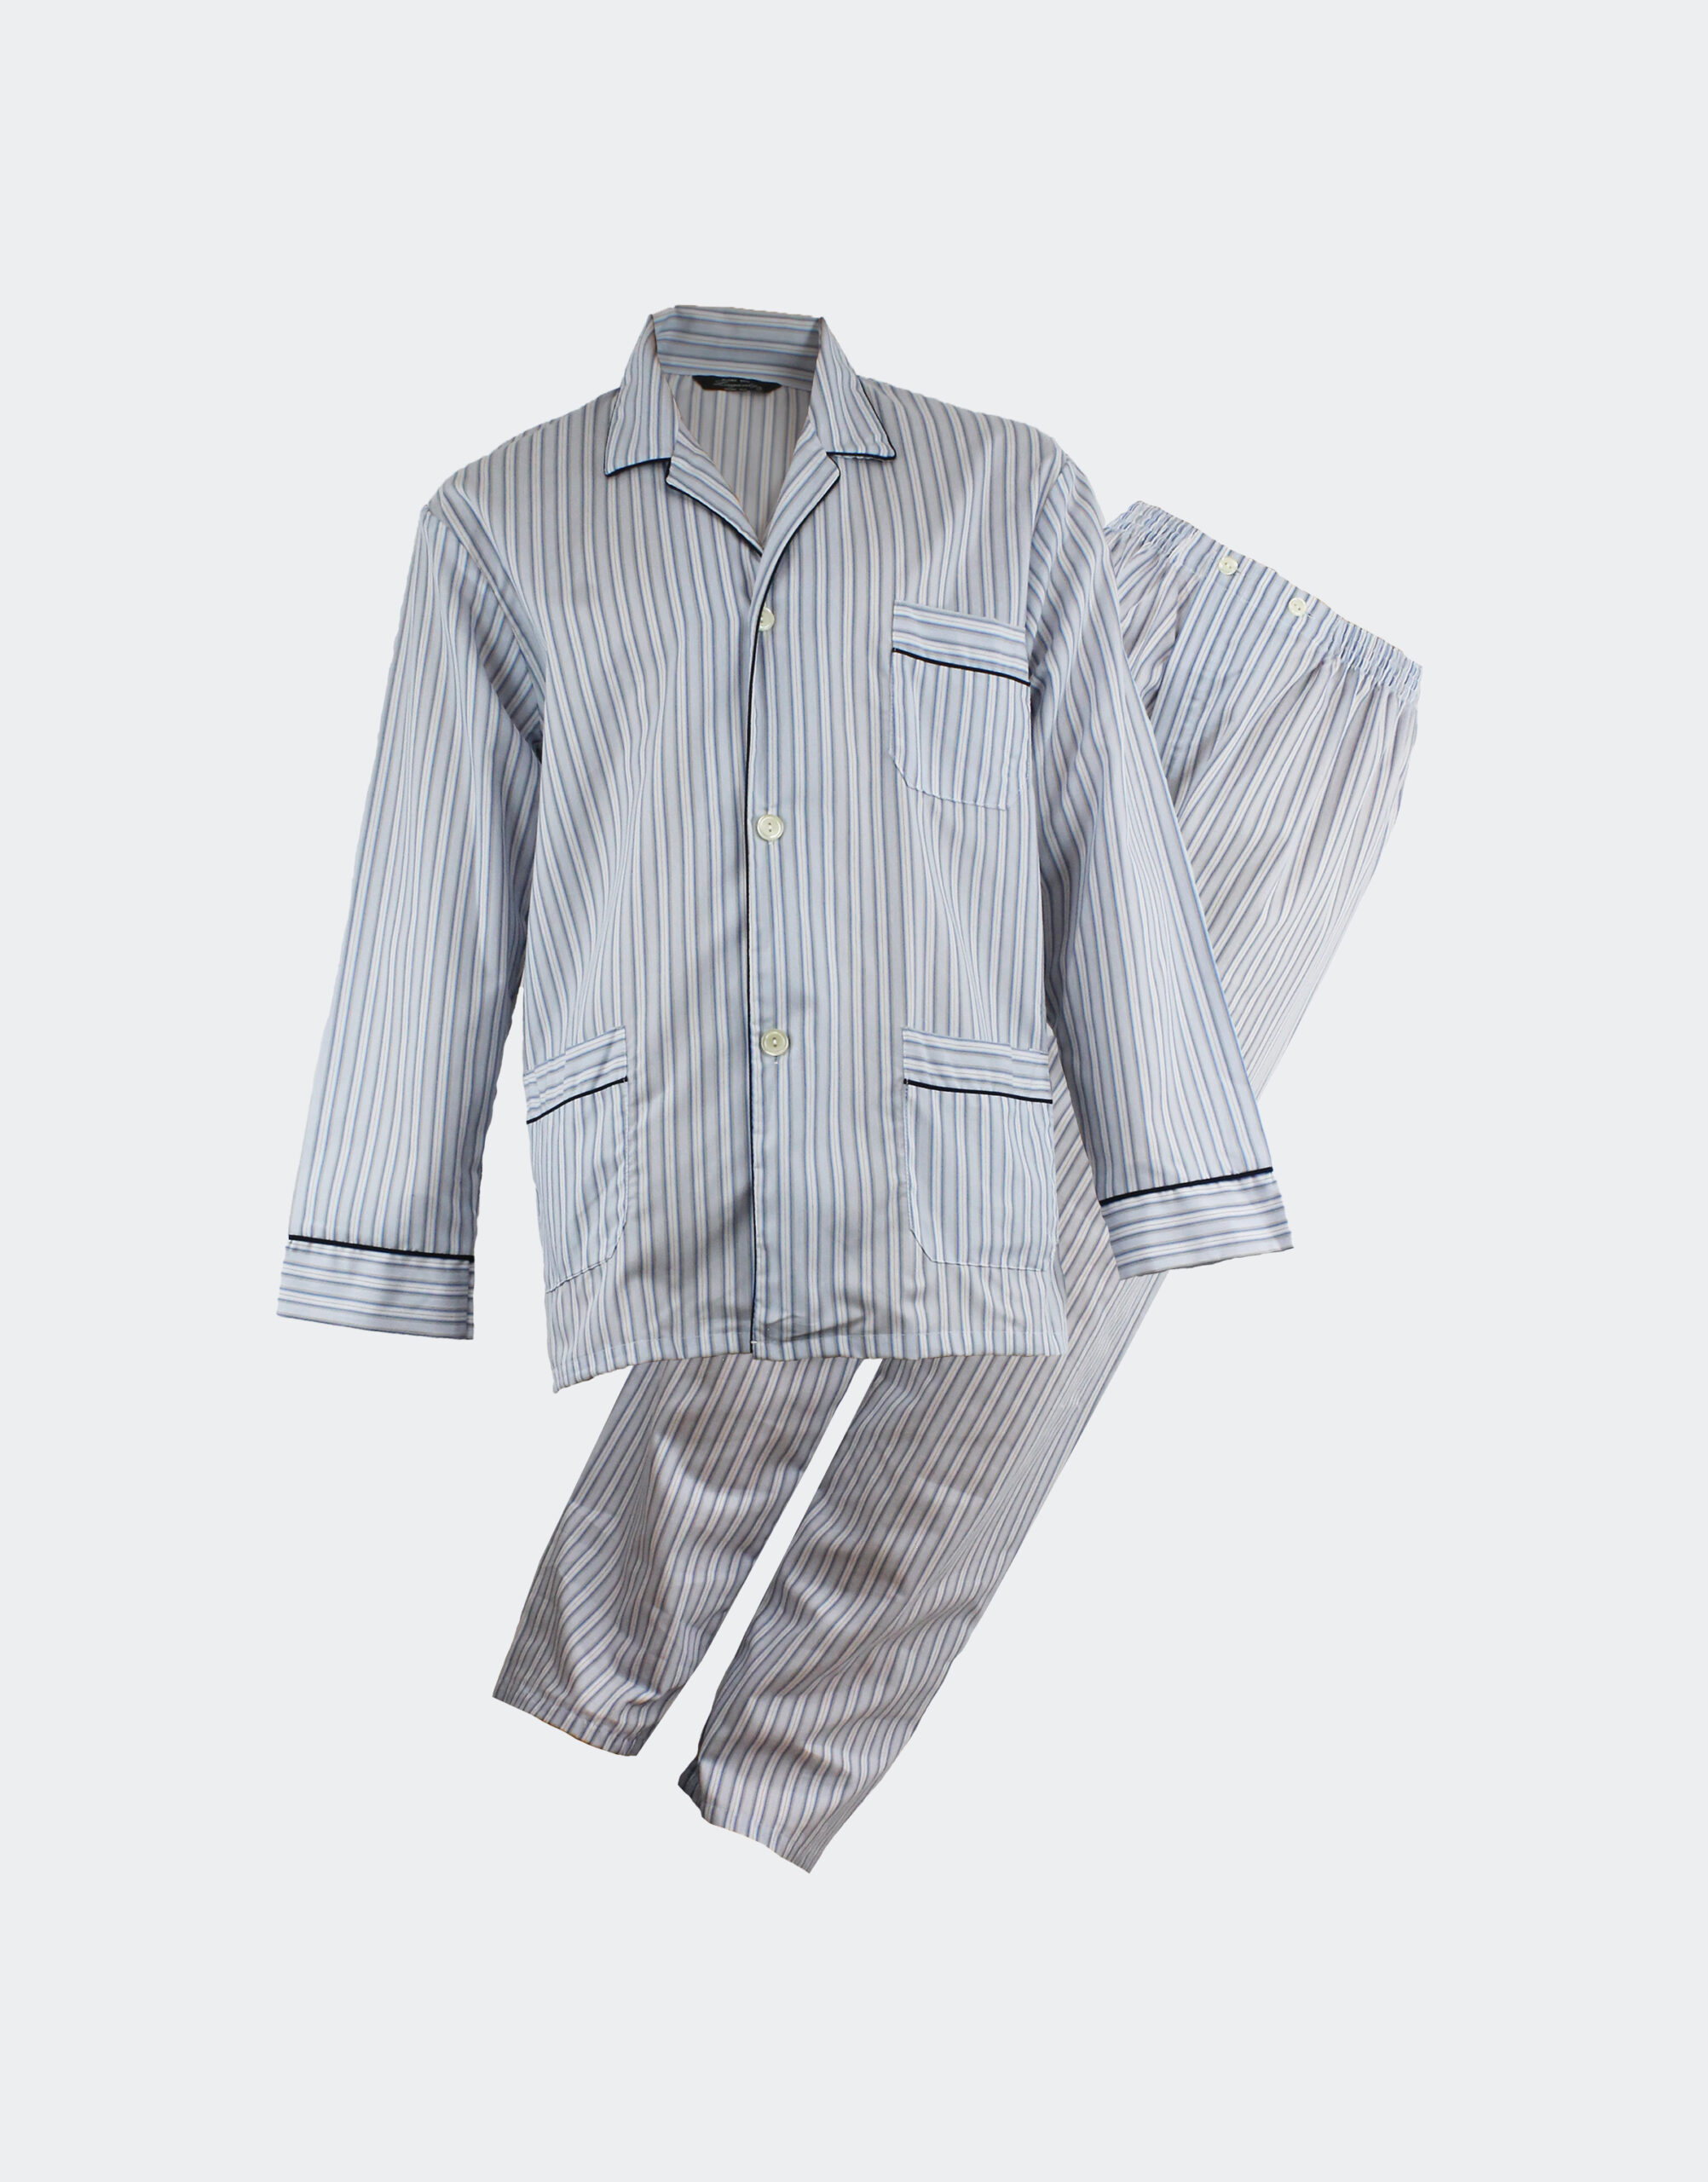 Pijama tela cuello y rayas azules | Indalesi